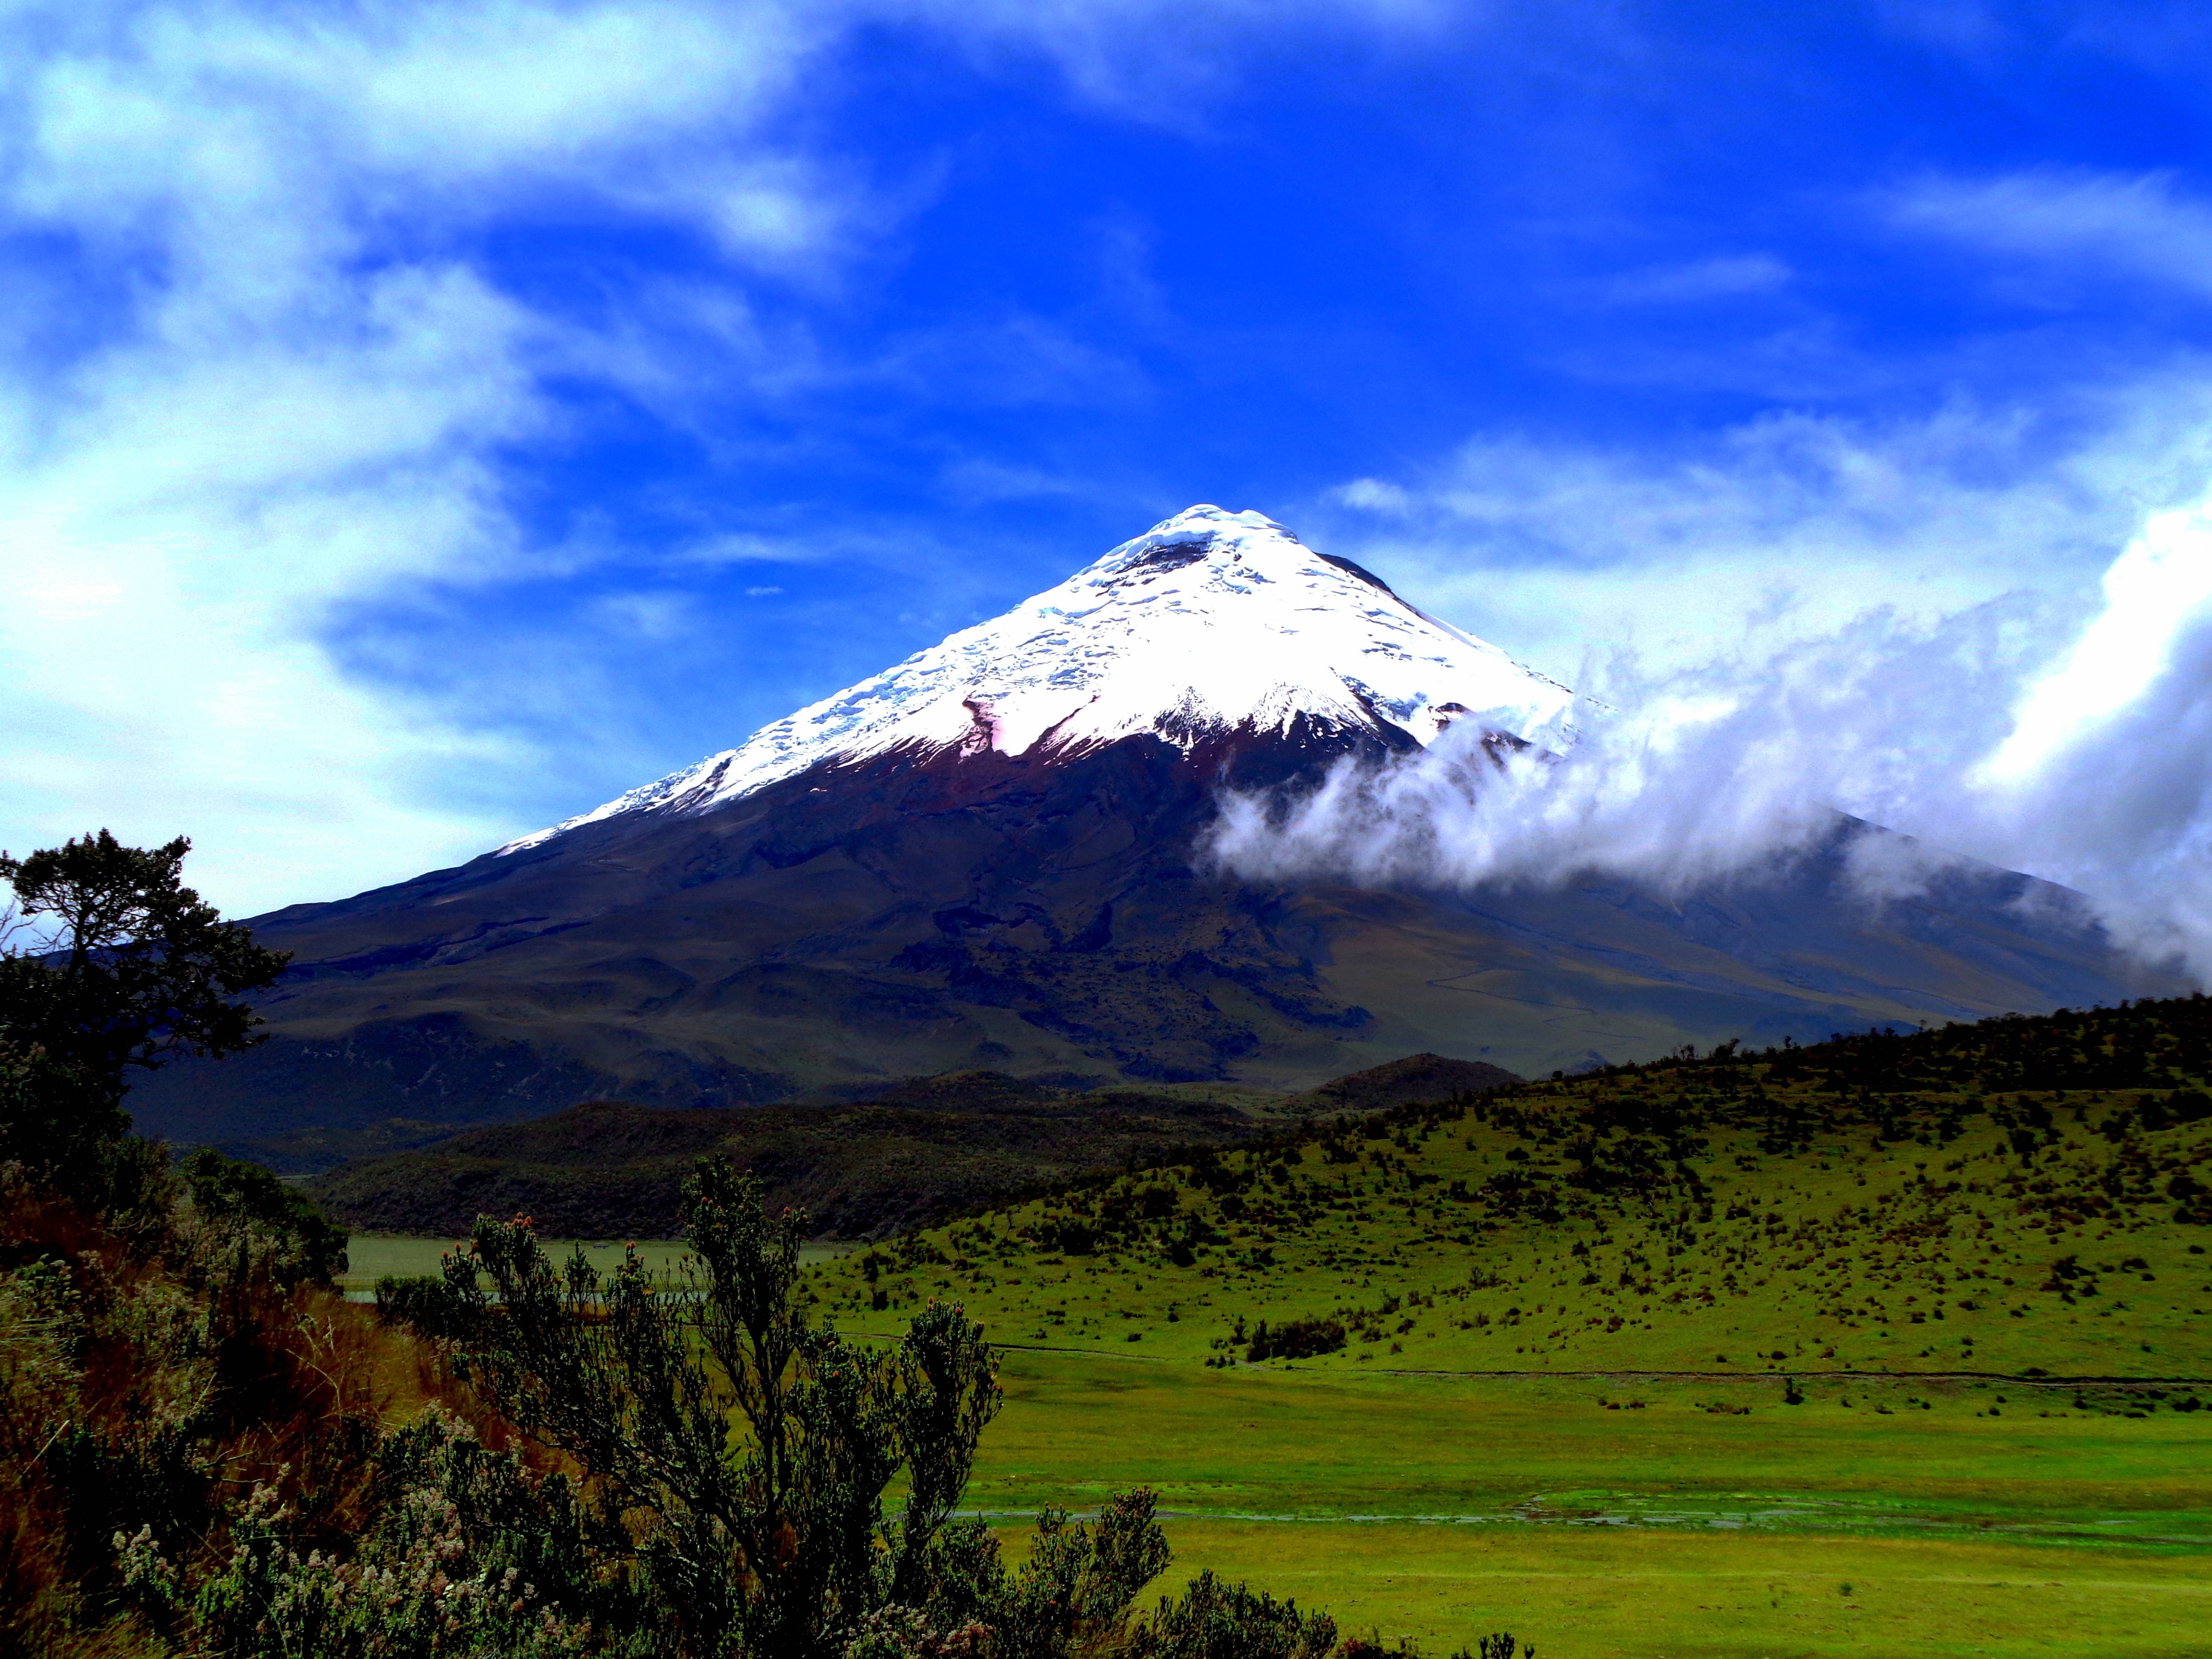 354110 Bild herunterladen erde/natur, vulkan, anden, cotopaxi, ecuador, himmel, schichtvulkan, vulkane - Hintergrundbilder und Bildschirmschoner kostenlos